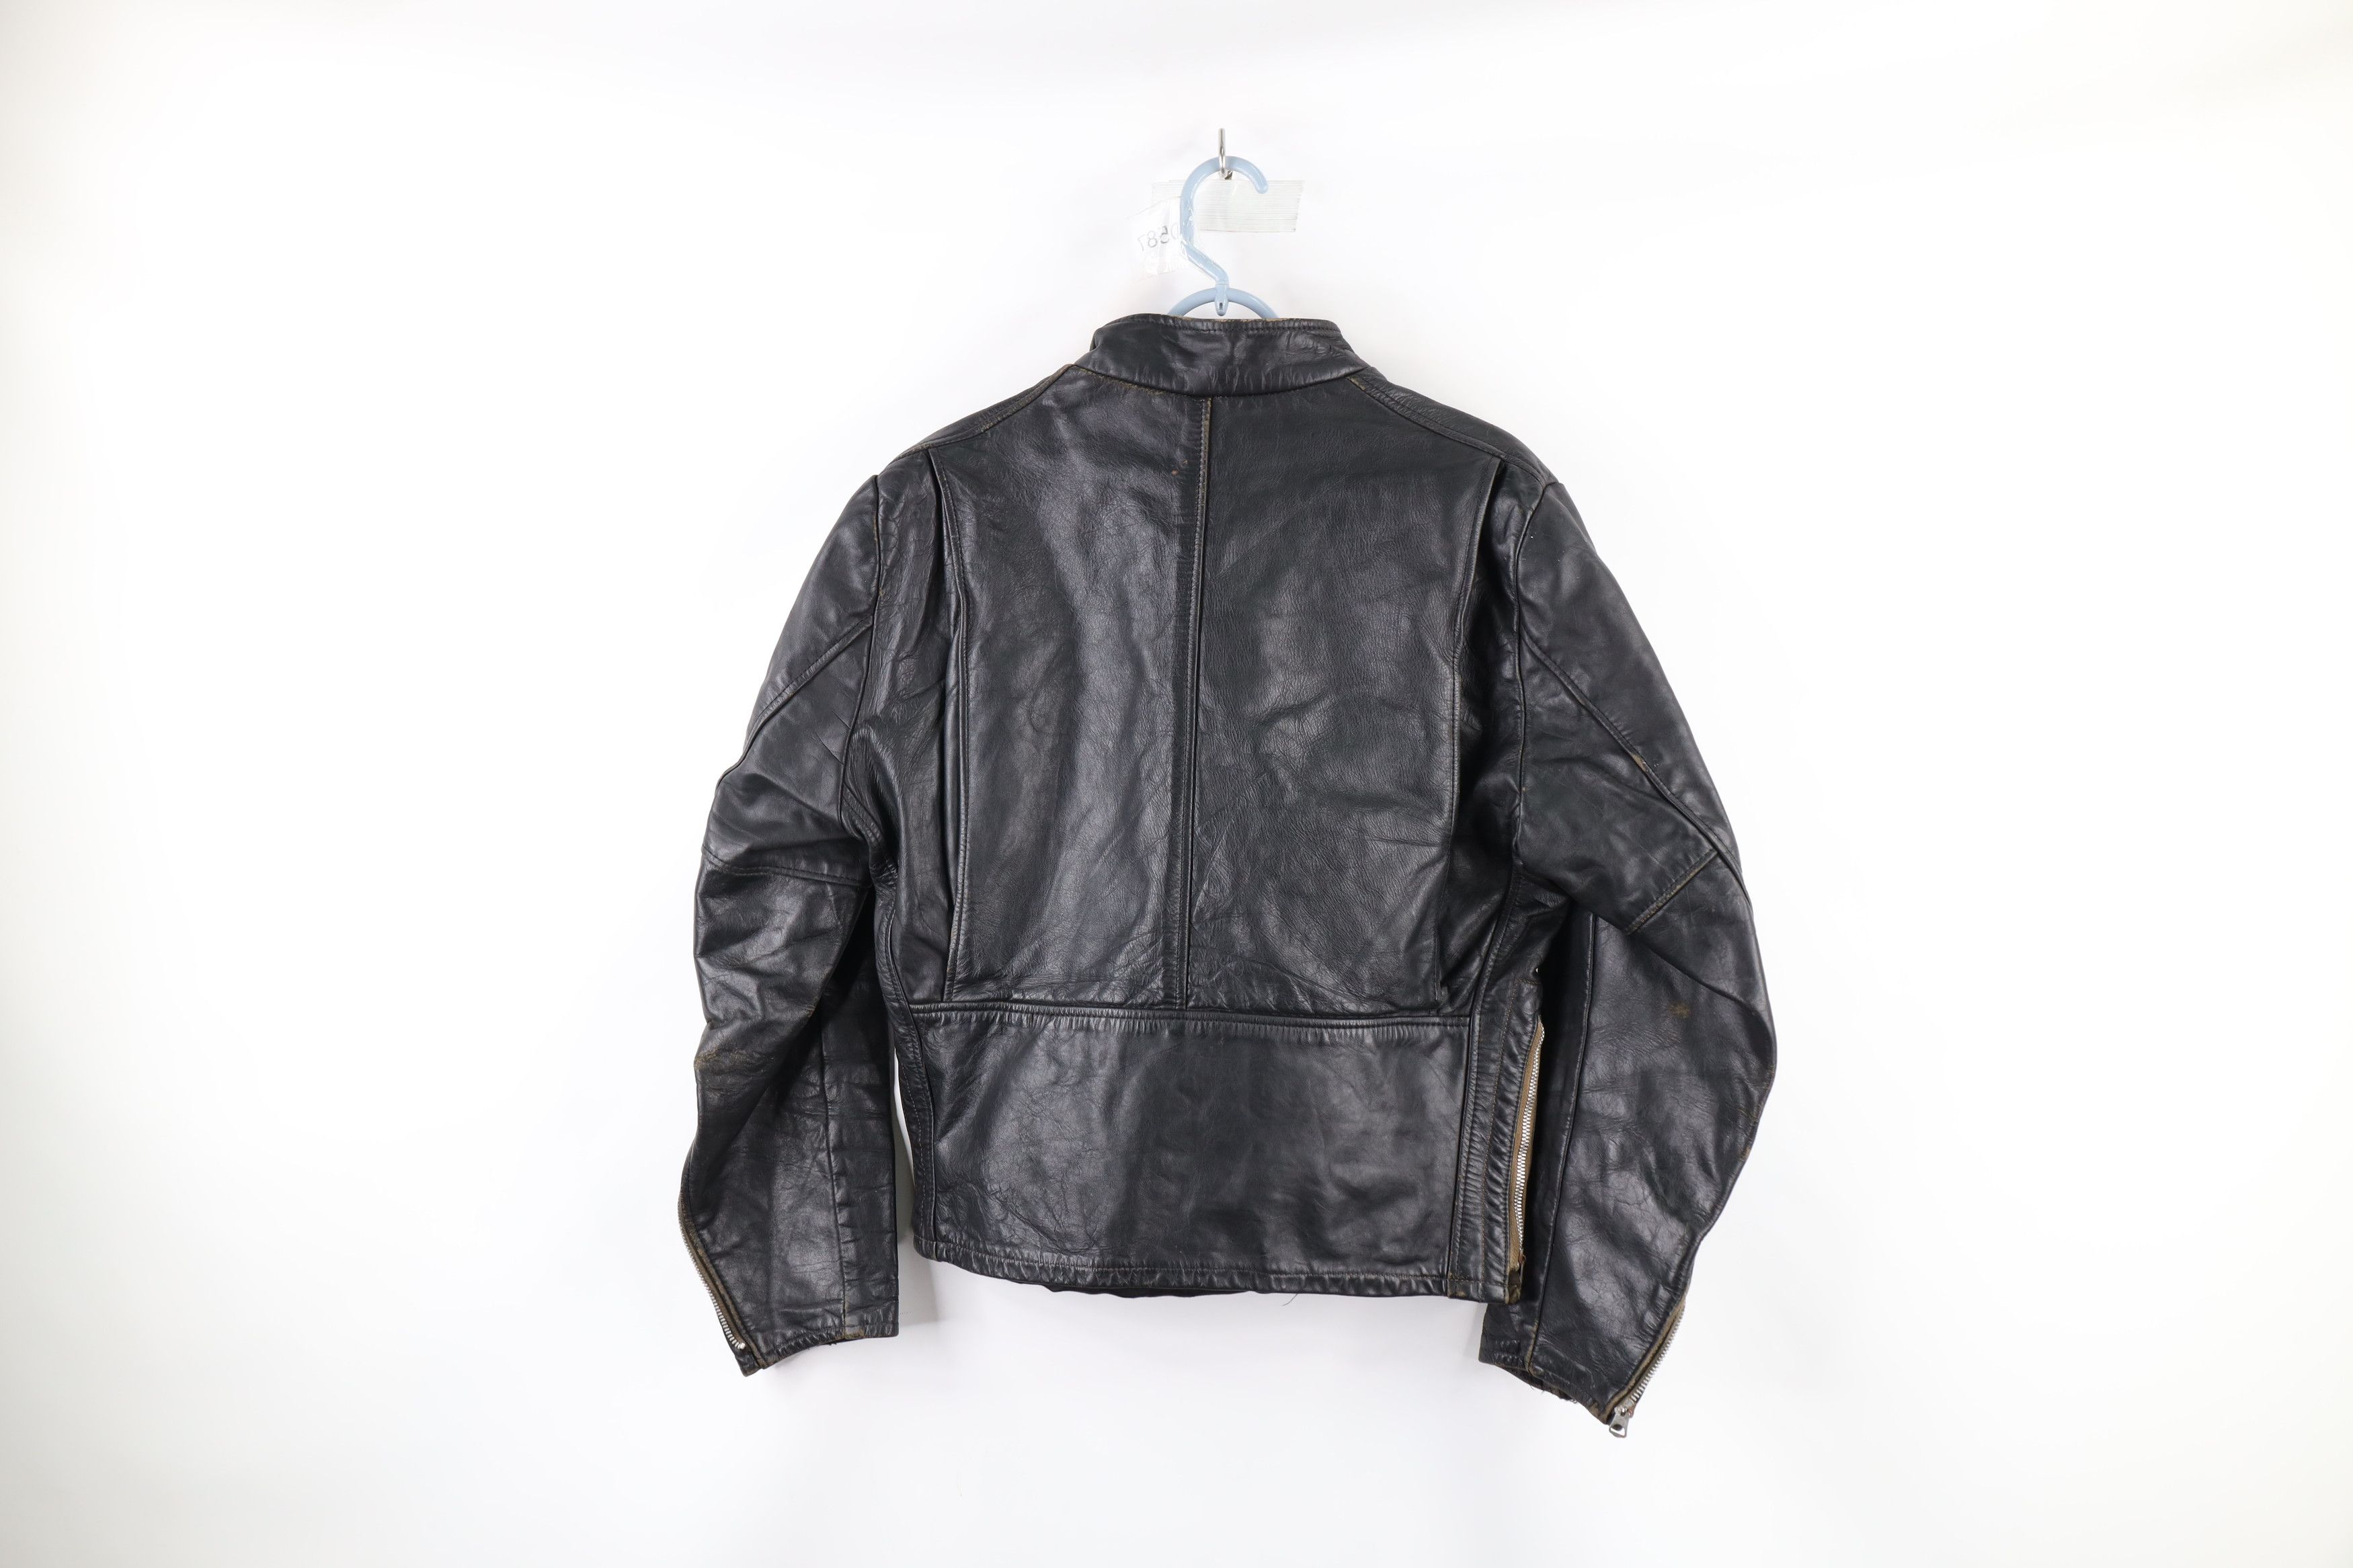 Vintage Vintage 70s Leather Cafe Racer Motorcycle Jacket Black USA Size US L / EU 52-54 / 3 - 15 Thumbnail